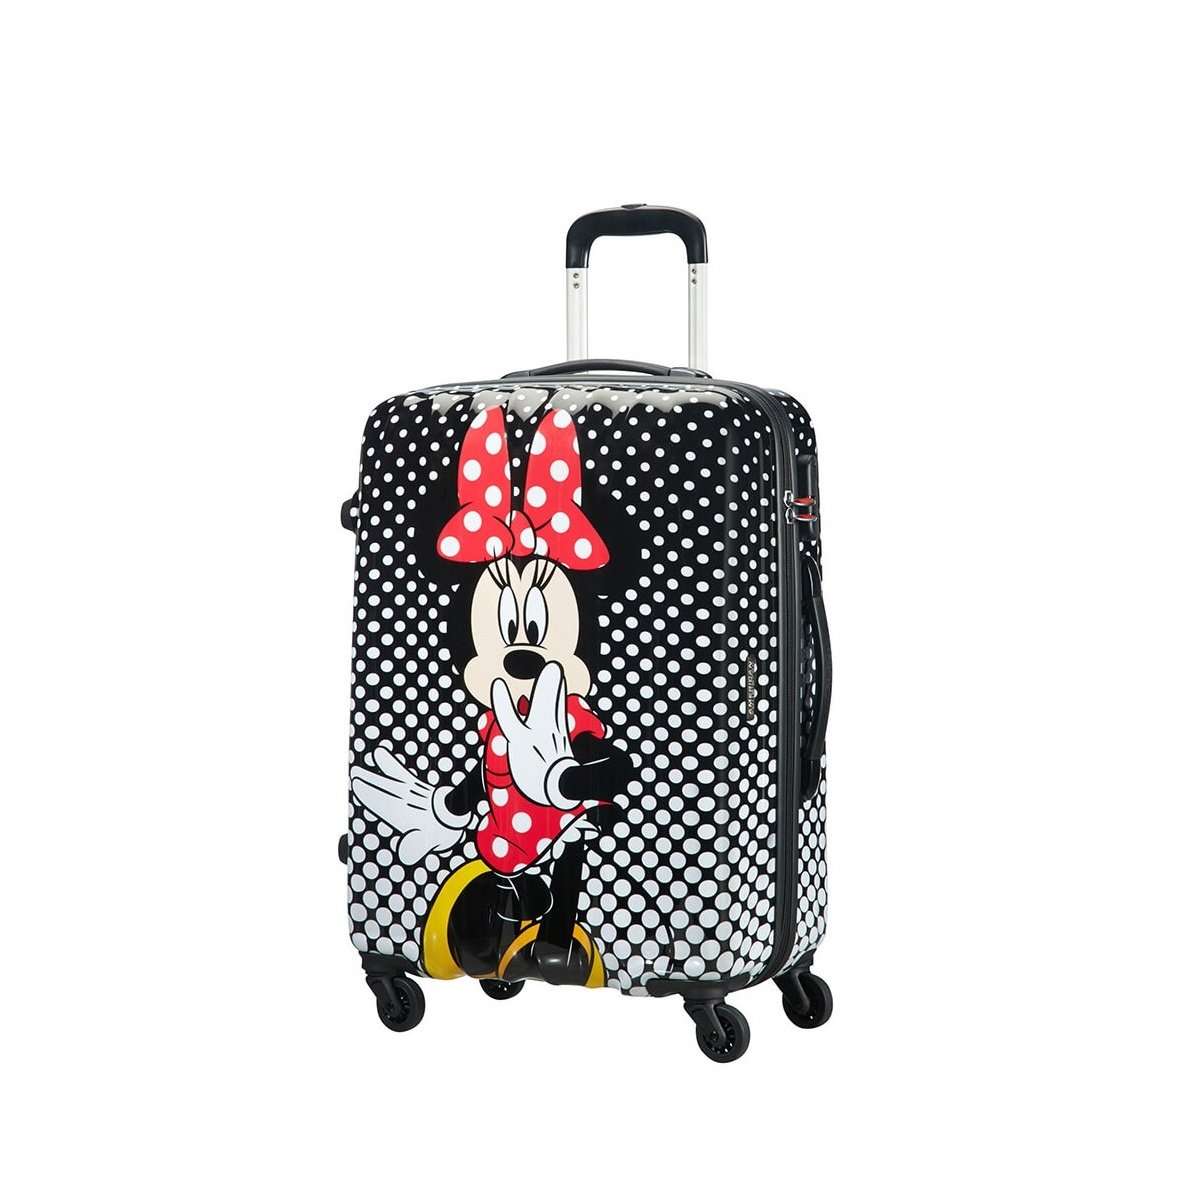 Maleta Grande 4 ruedas Minnie Polka Dots Disney Legends de American Tourister